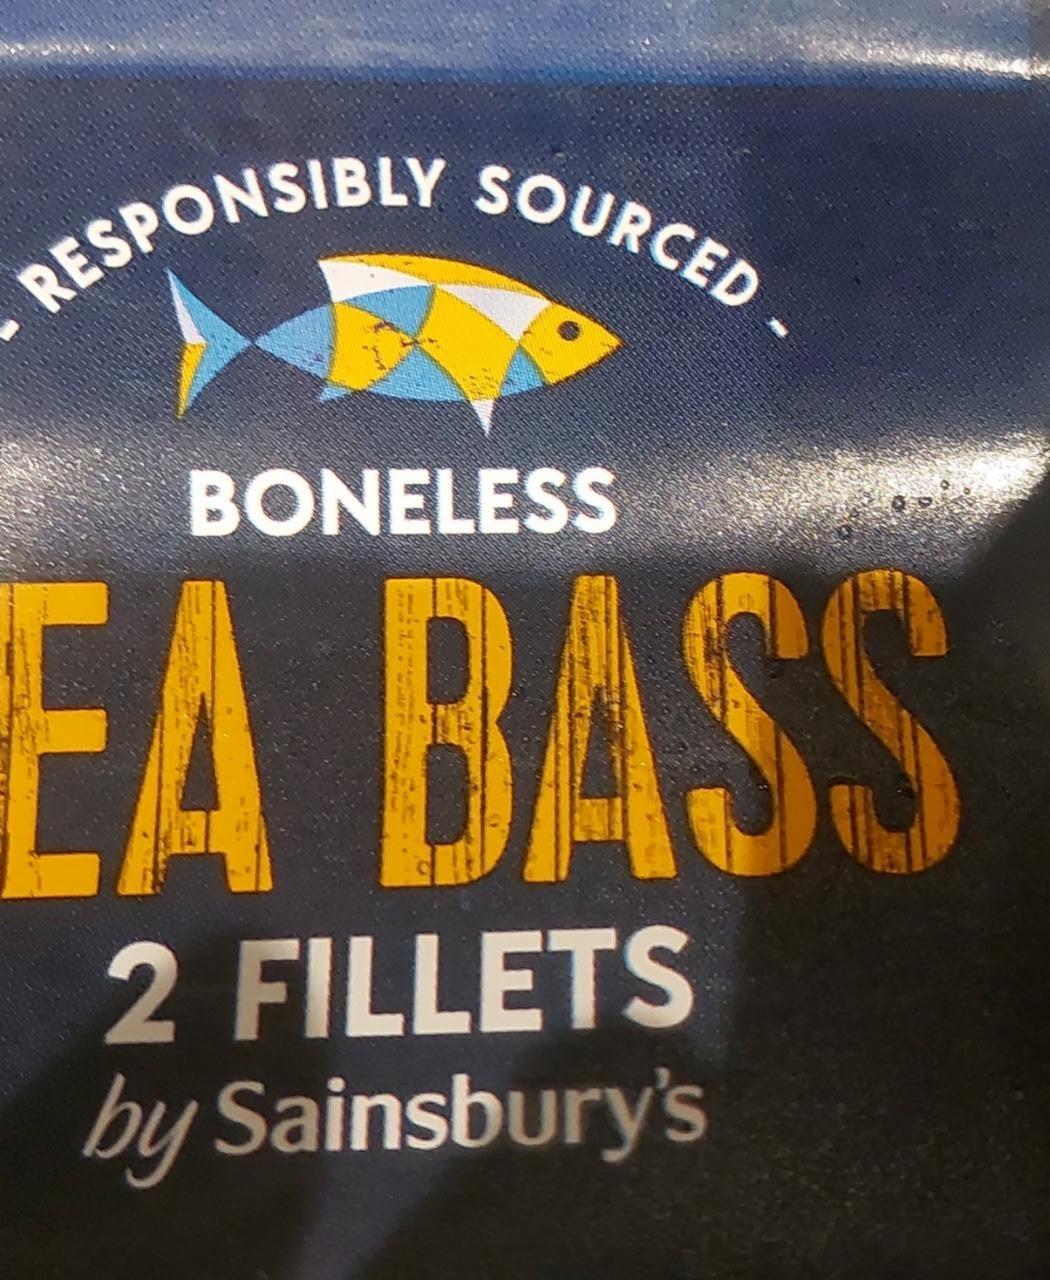 Fotografie - SEA Bass bounless by Sainsbury's